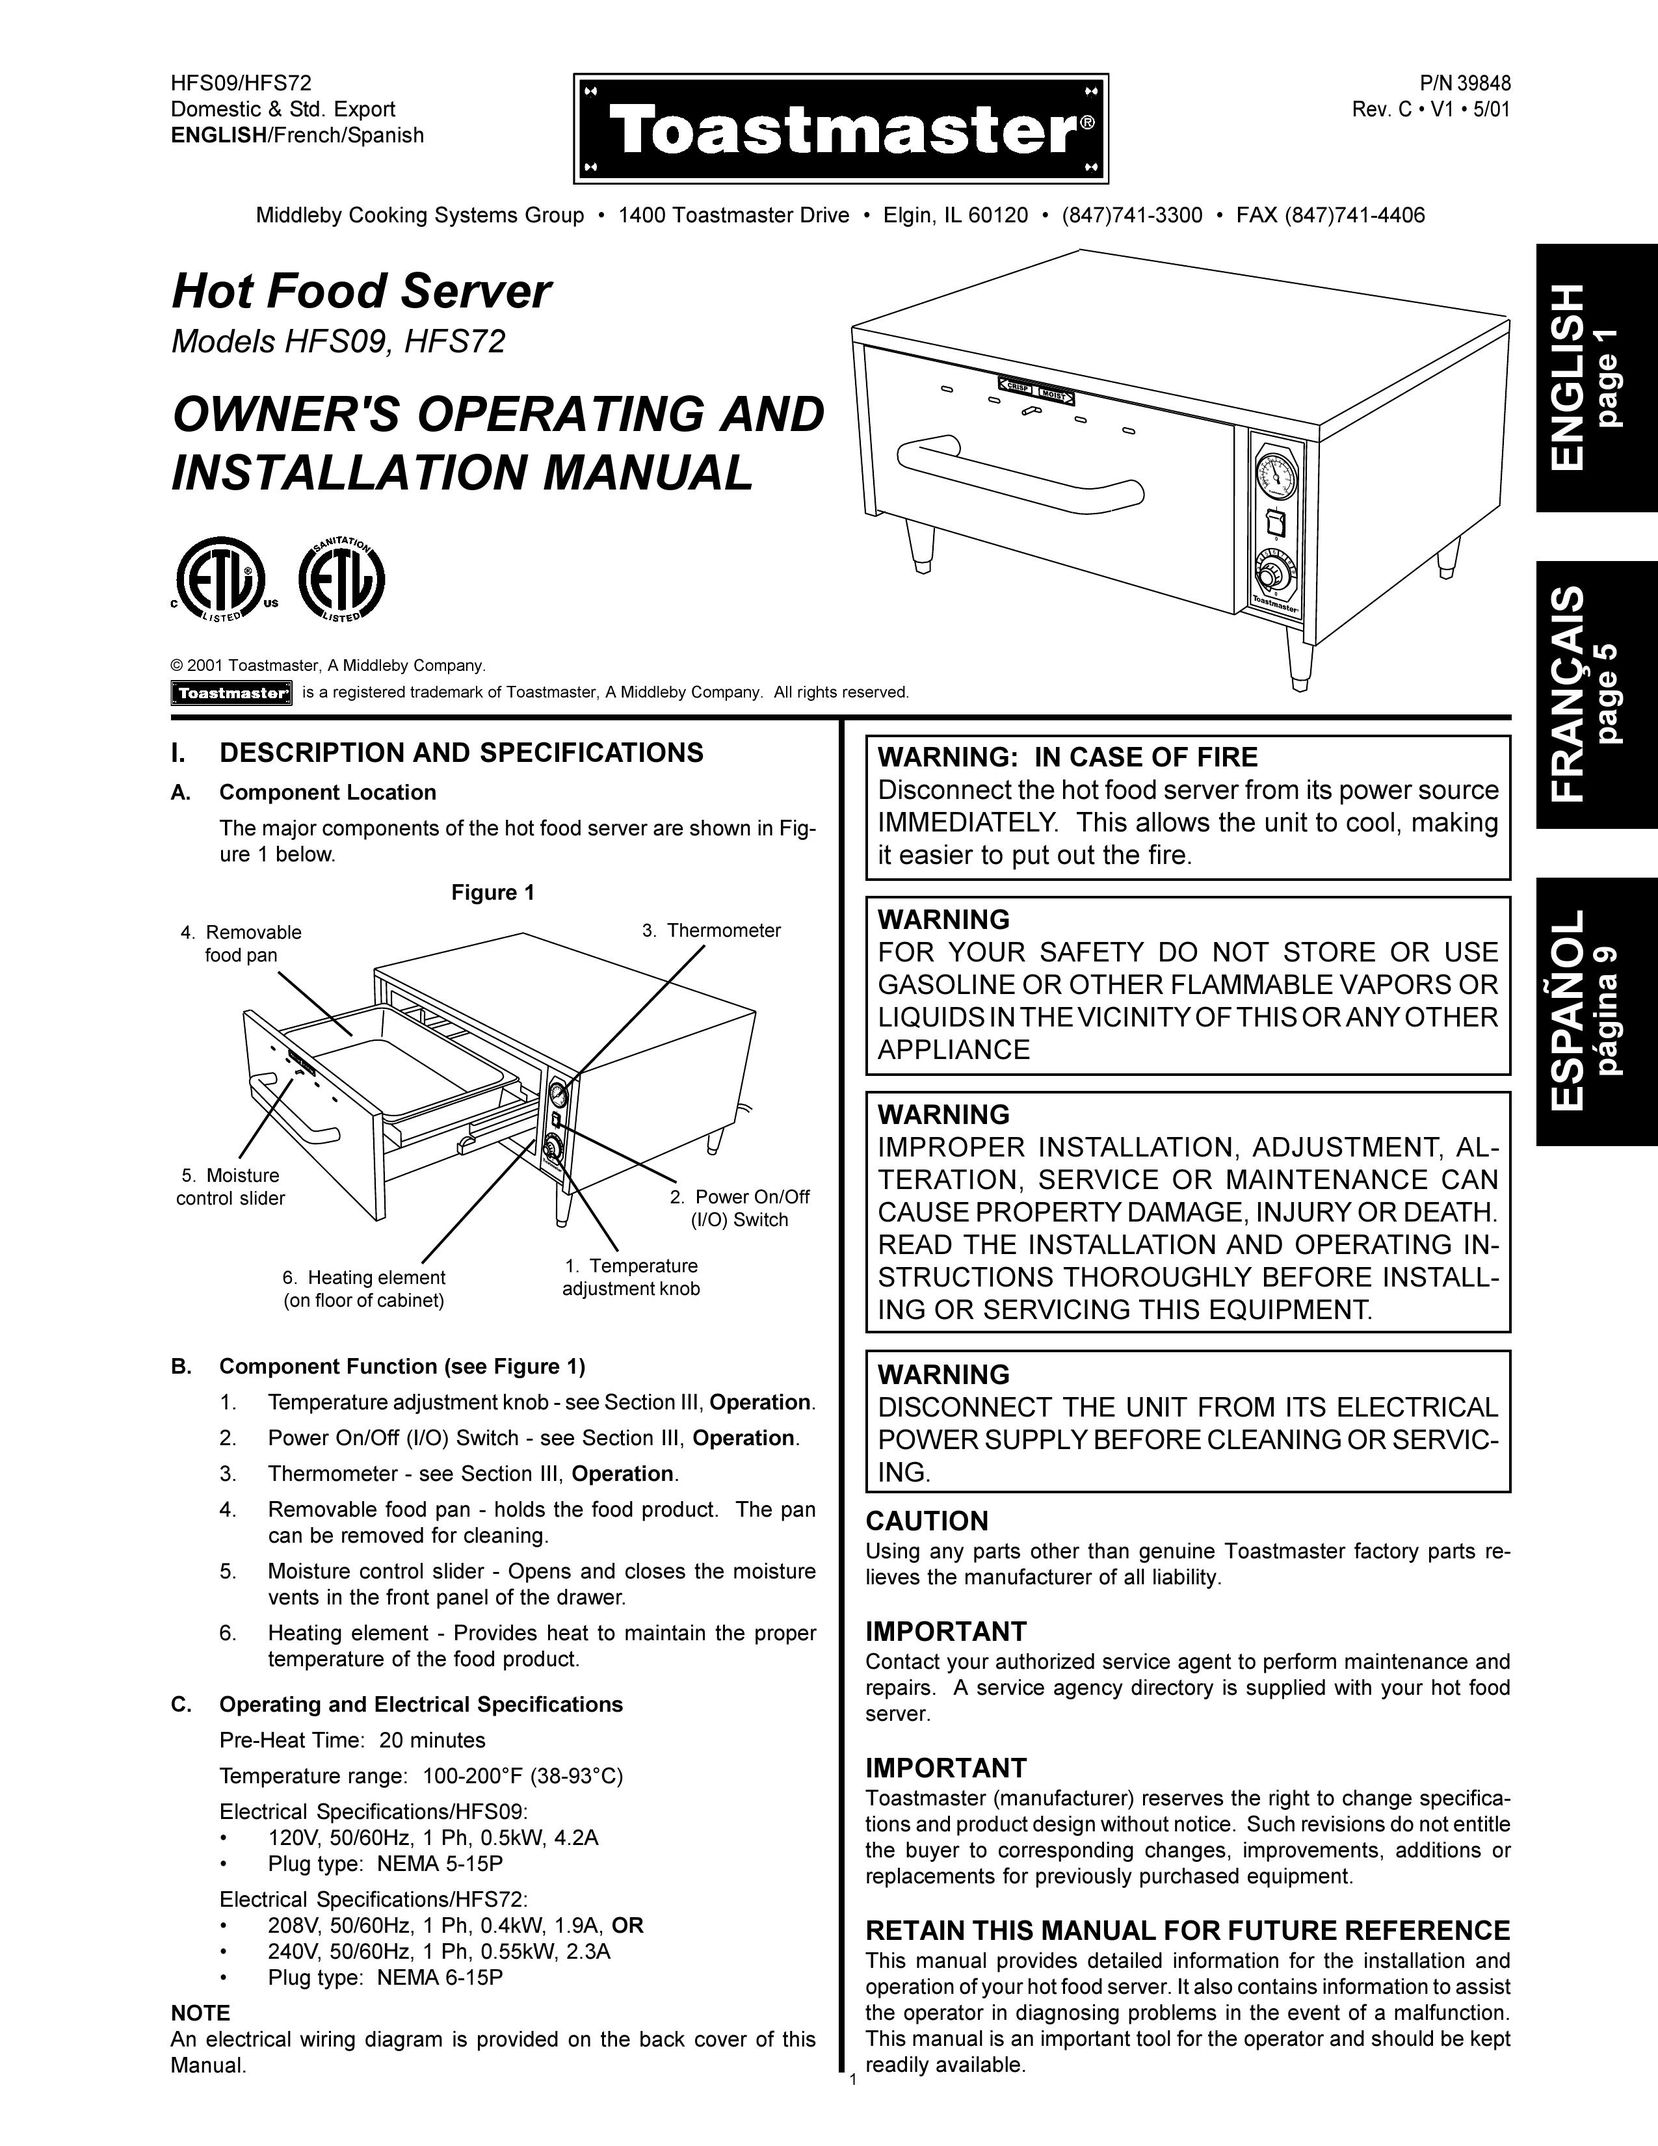 Toastmaster HFS72 Food Warmer User Manual